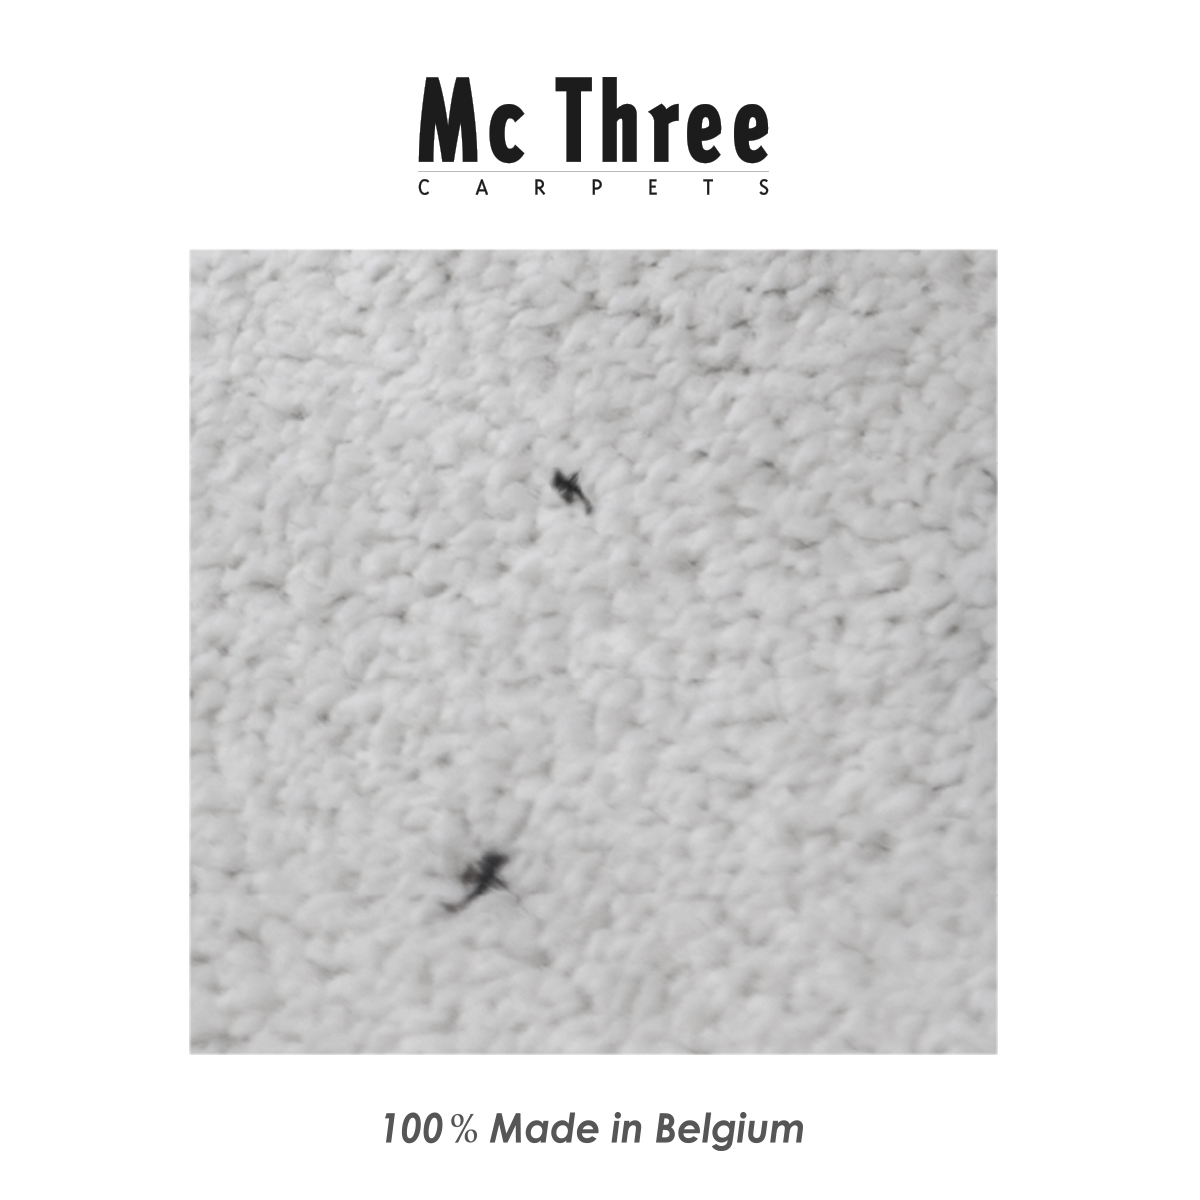 Mc ThreeSpots Carpet 맥쓰리 스팟 카페트